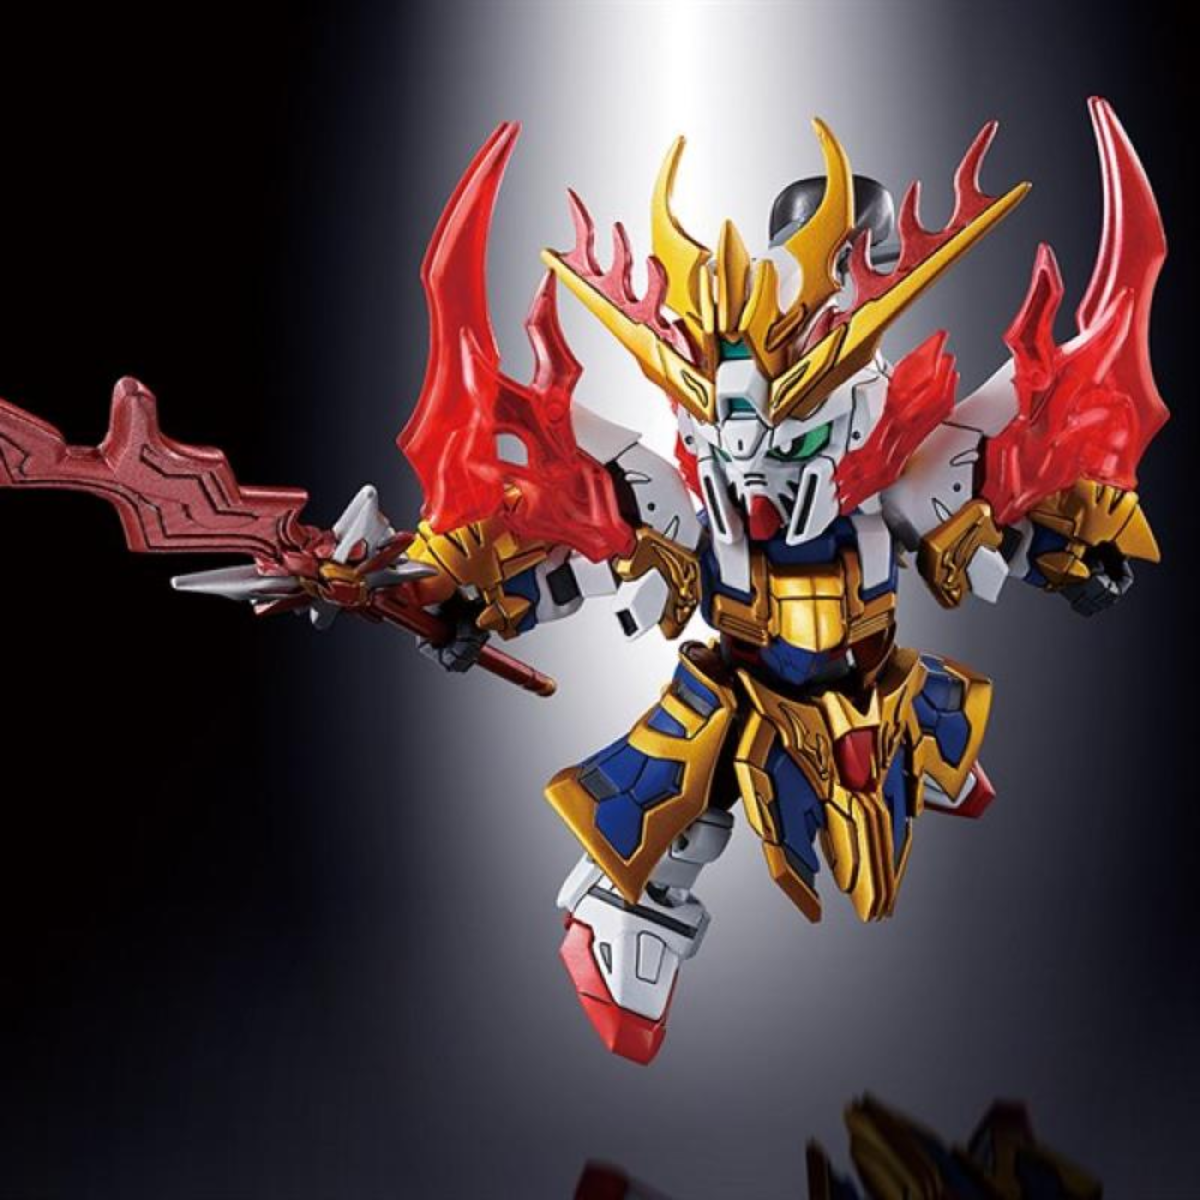 Gunpla SD Sangoku Soketsuden God Gundam &quot;Zhang Fei&quot;-Bandai-Ace Cards &amp; Collectibles